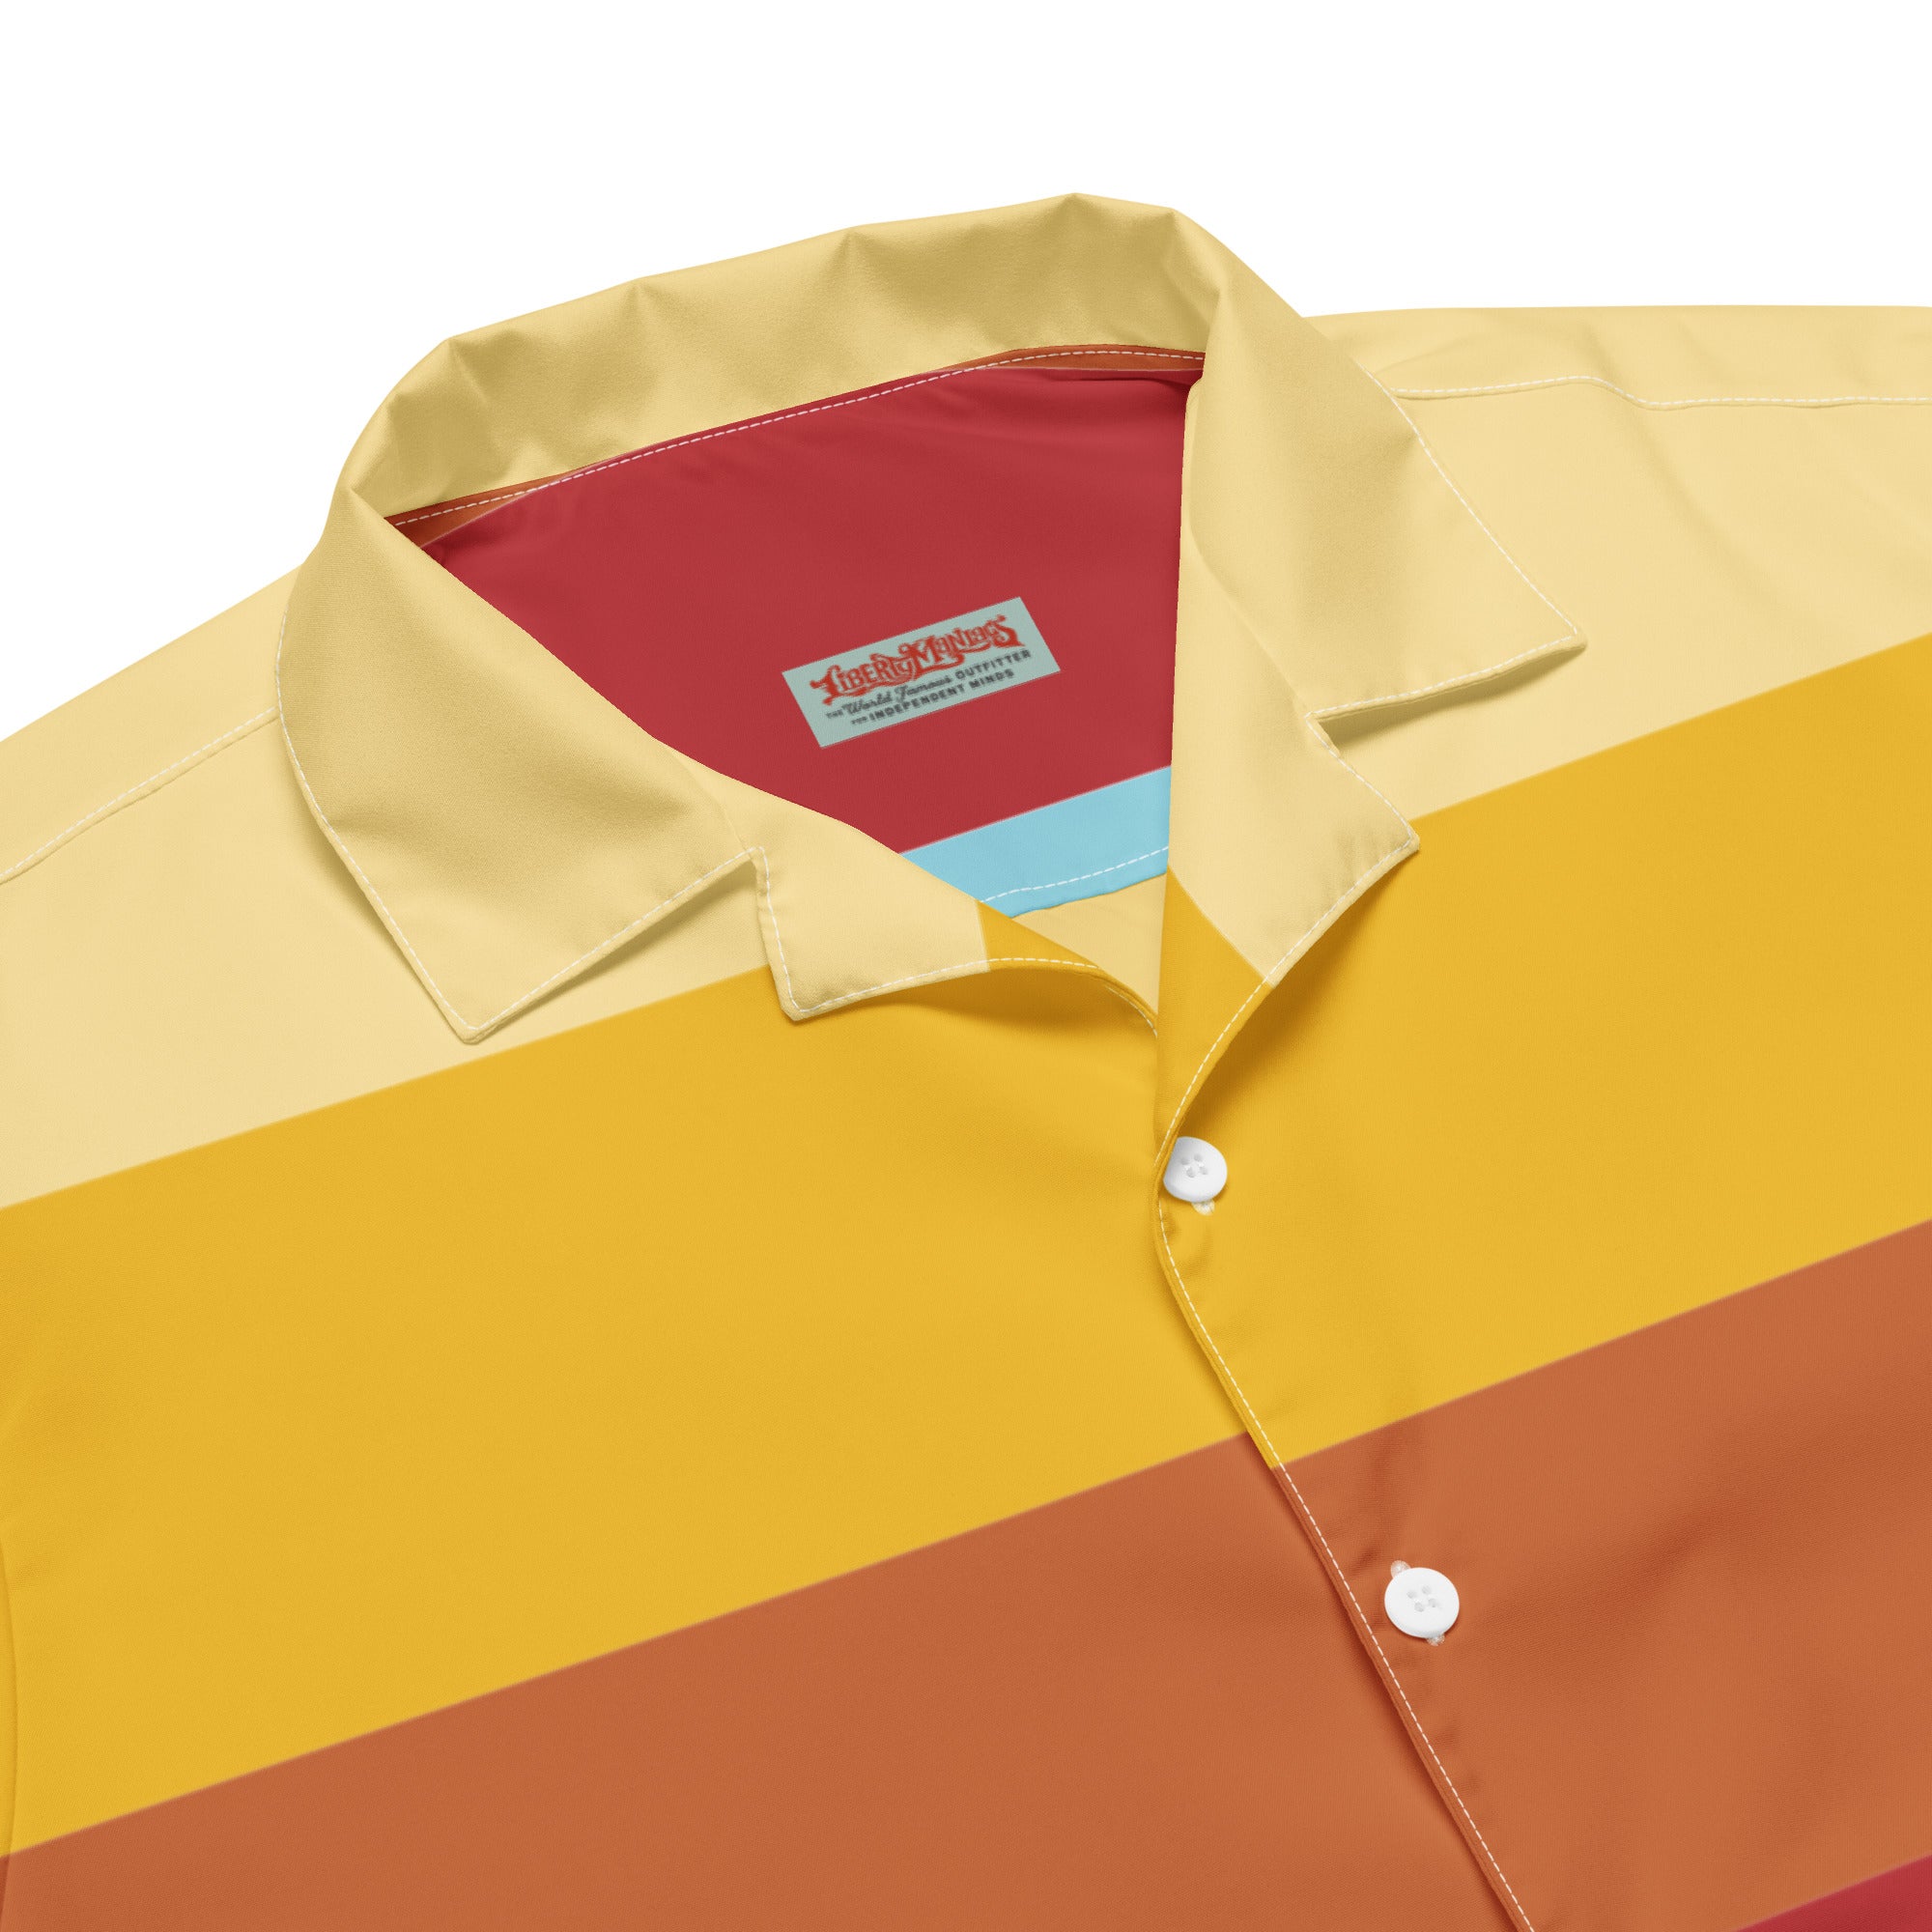 Tequila Sunrise Spectrum Button-Up Shirt